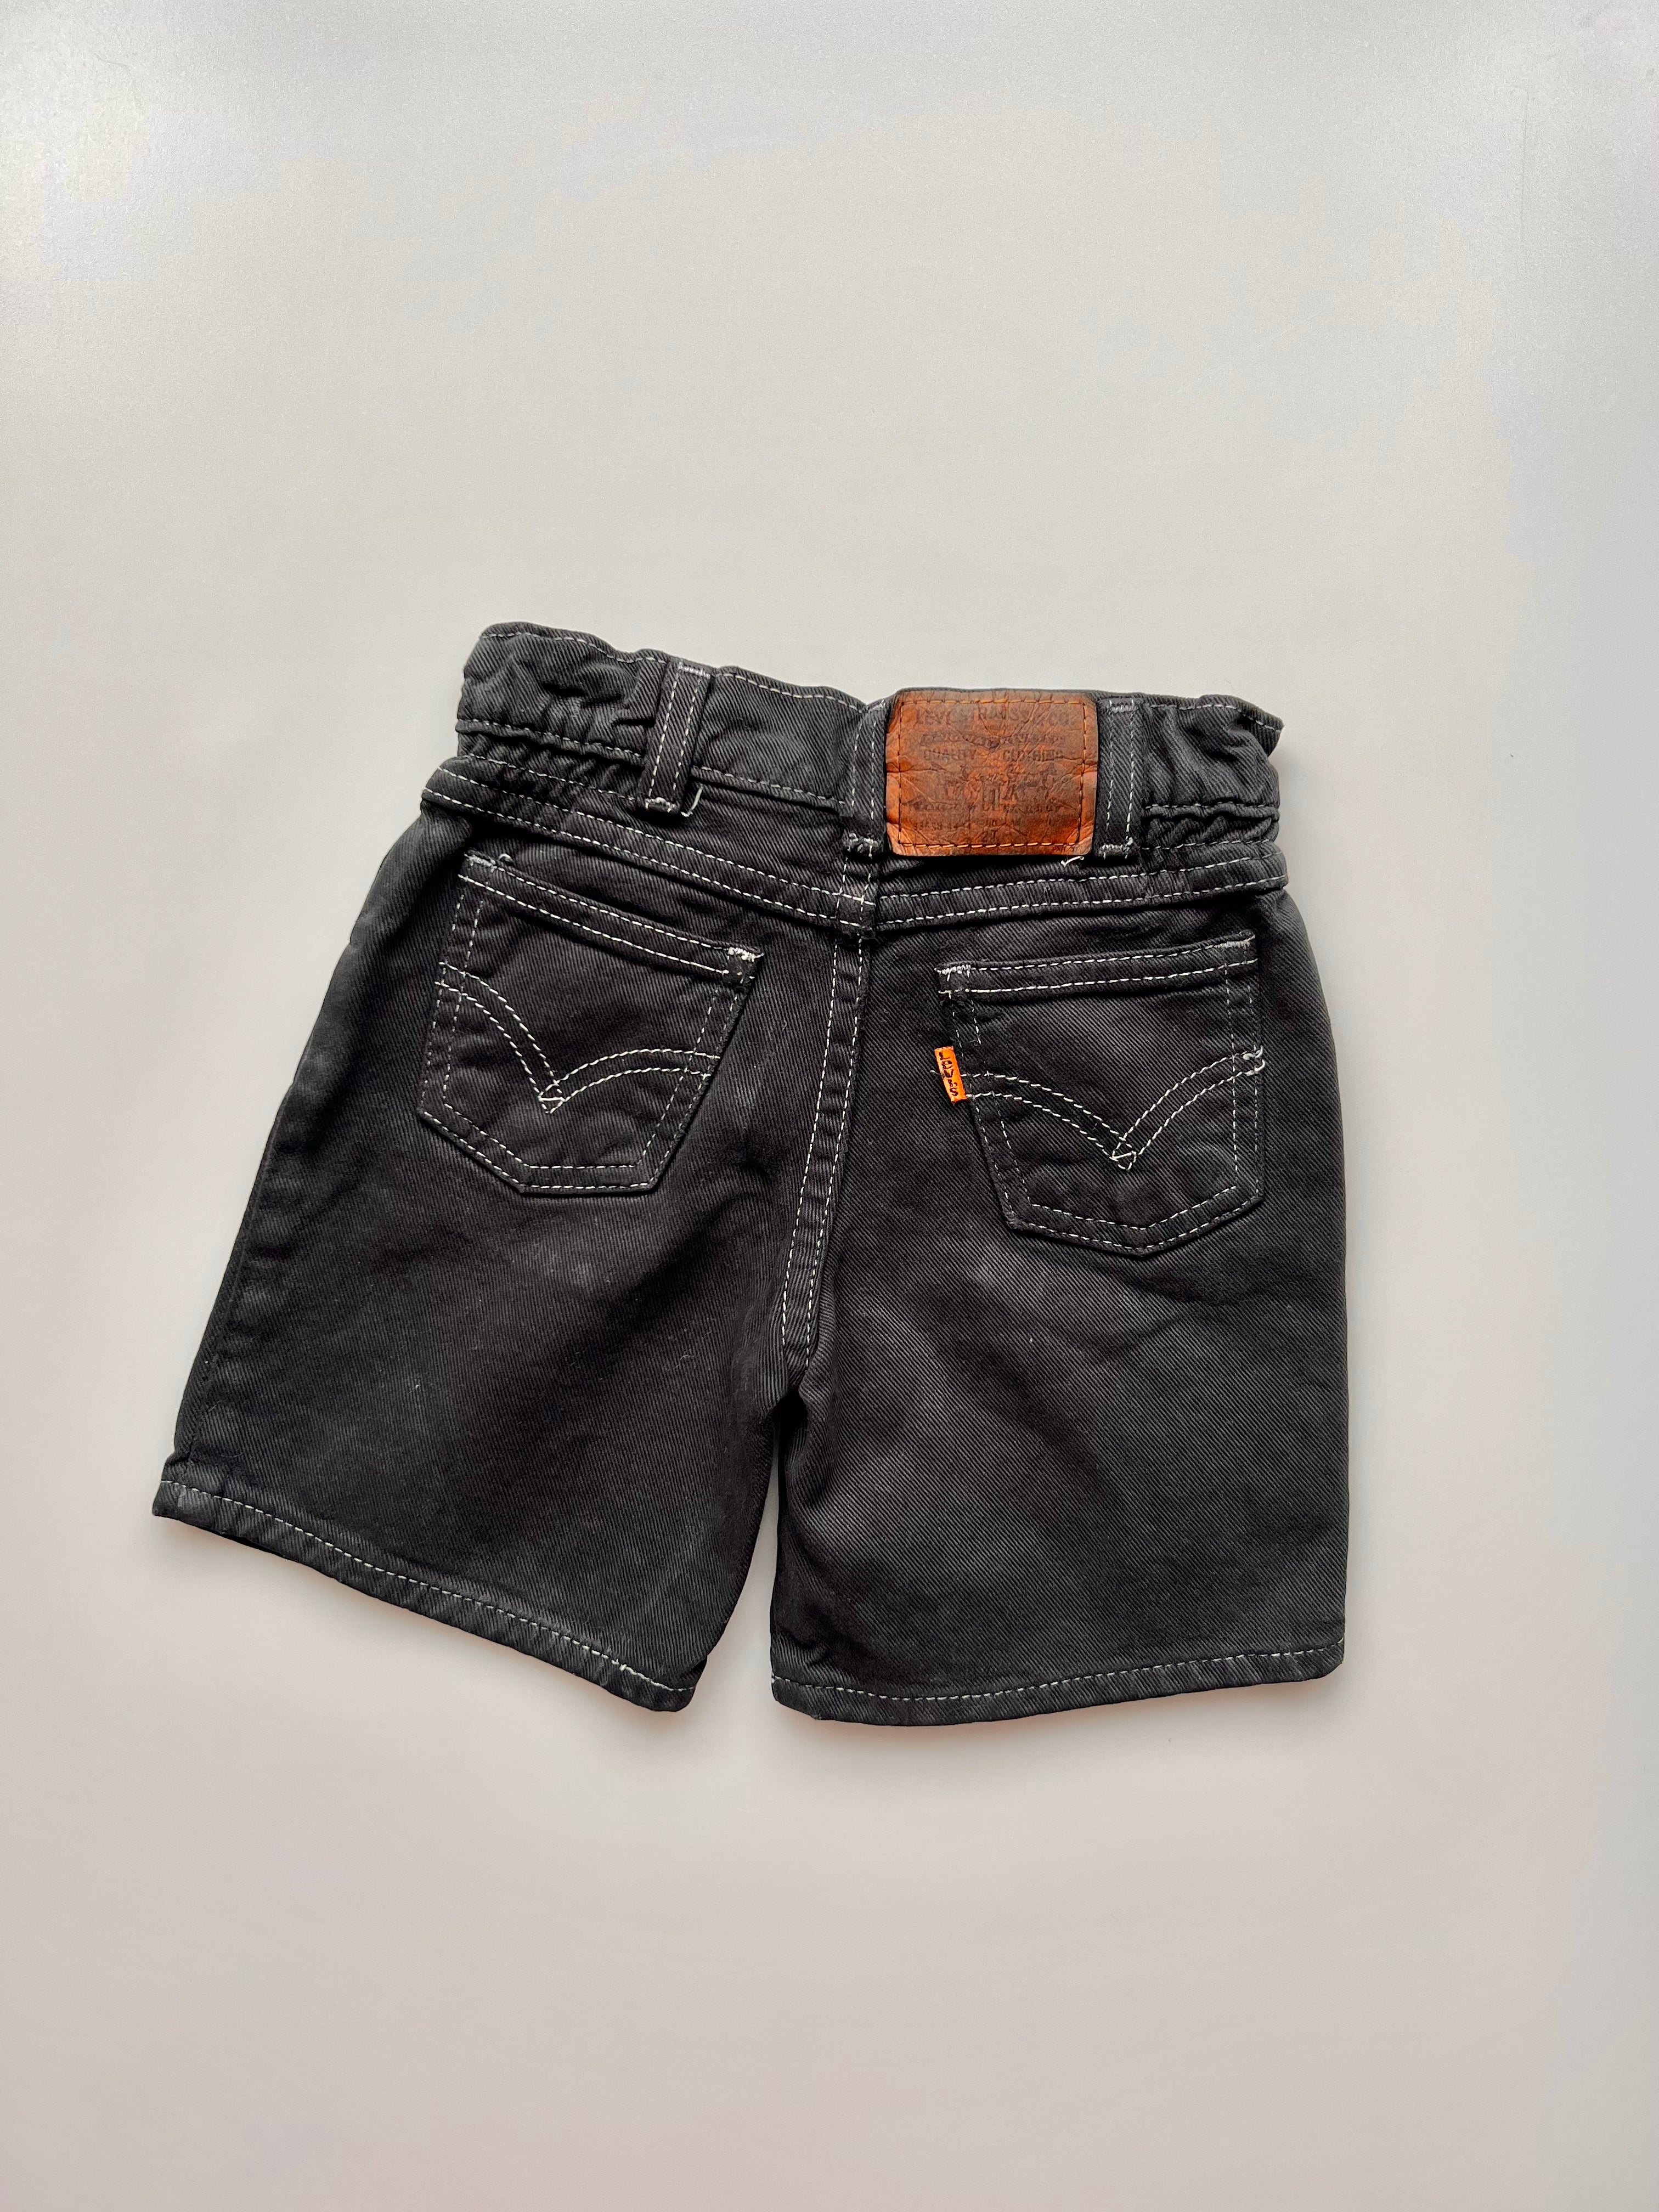 Levi's Vintage Orange Tab Shorts Age 2-3